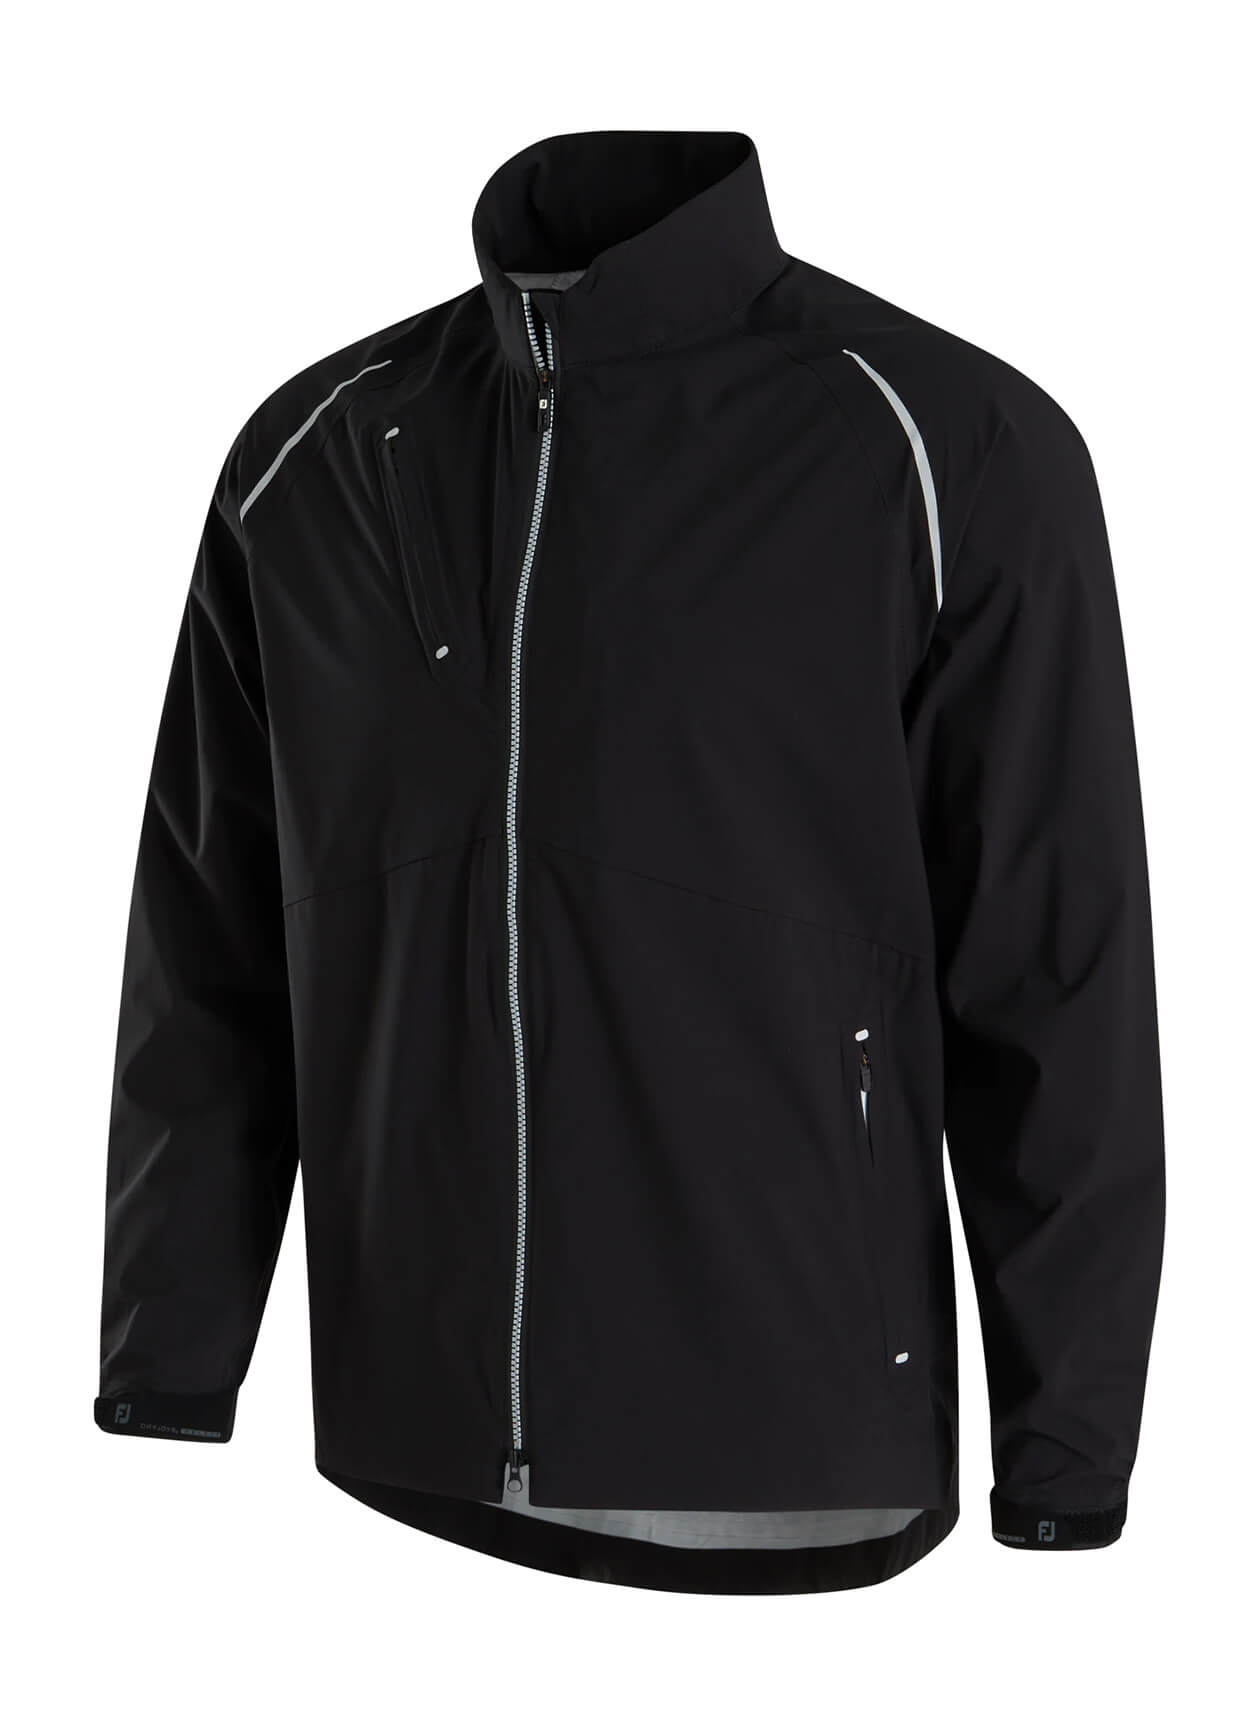 FootJoy FJ517 - Men's Select Jacket